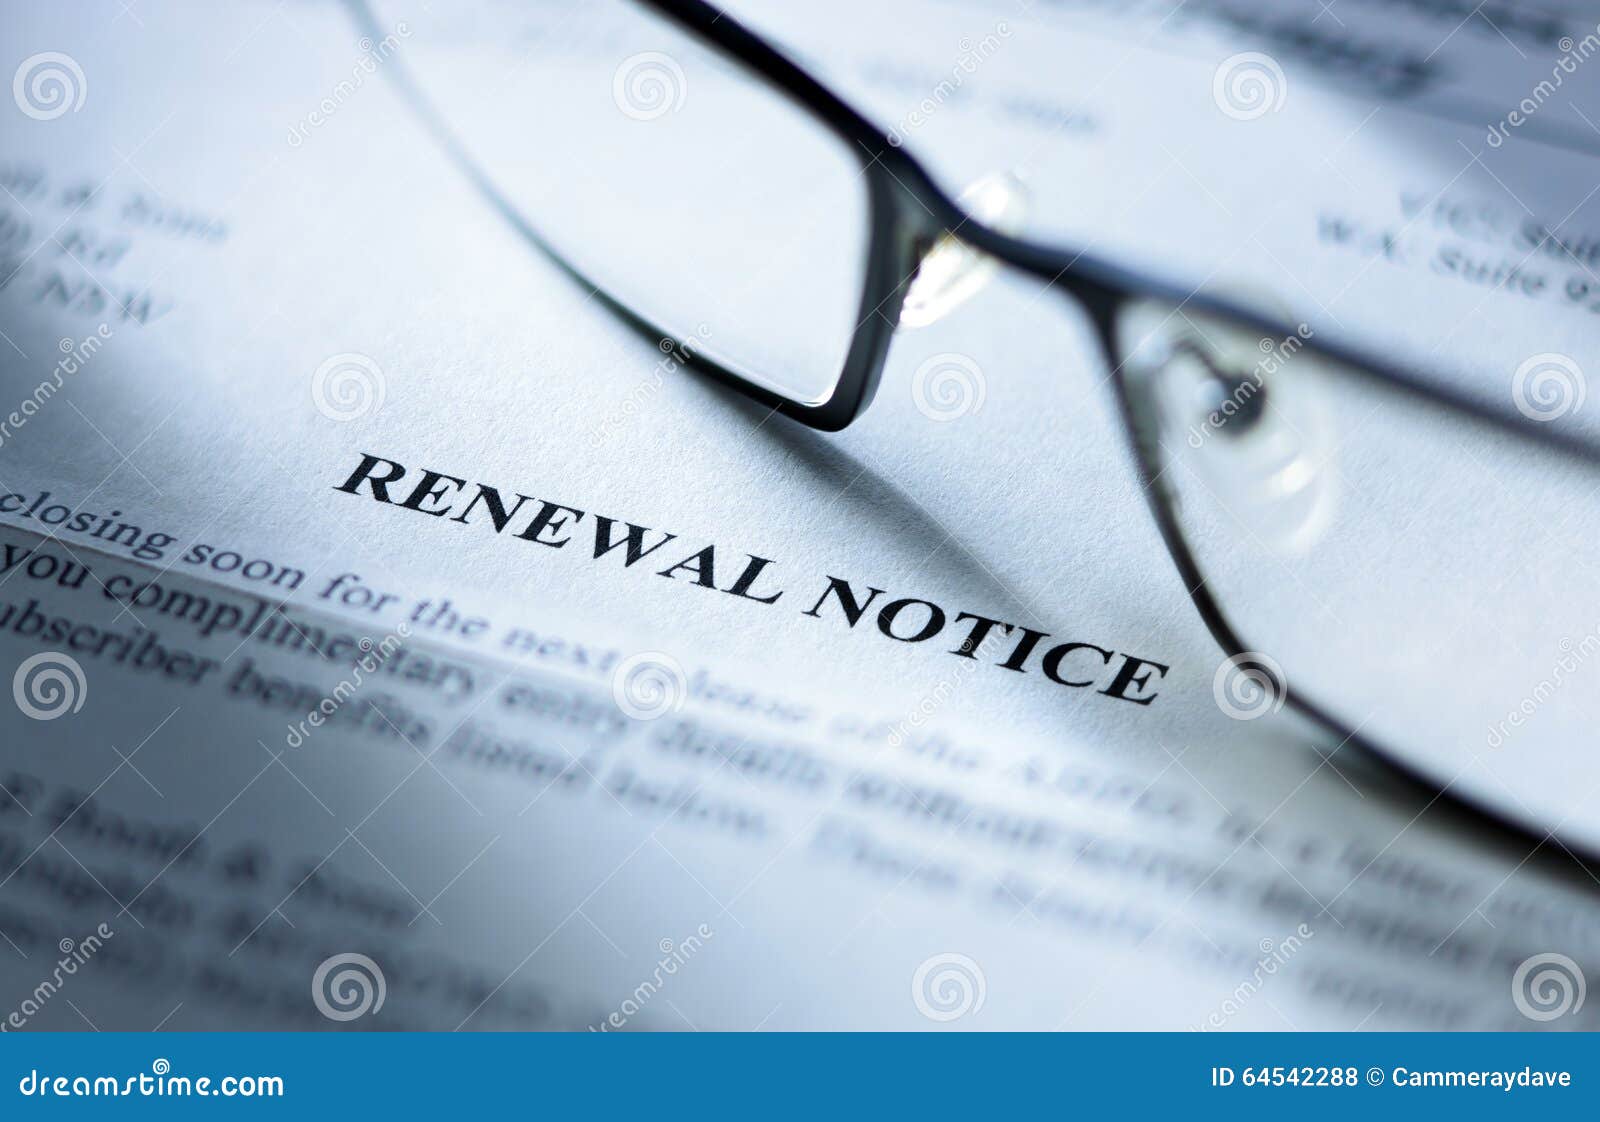 renewal notice membership dues subscription